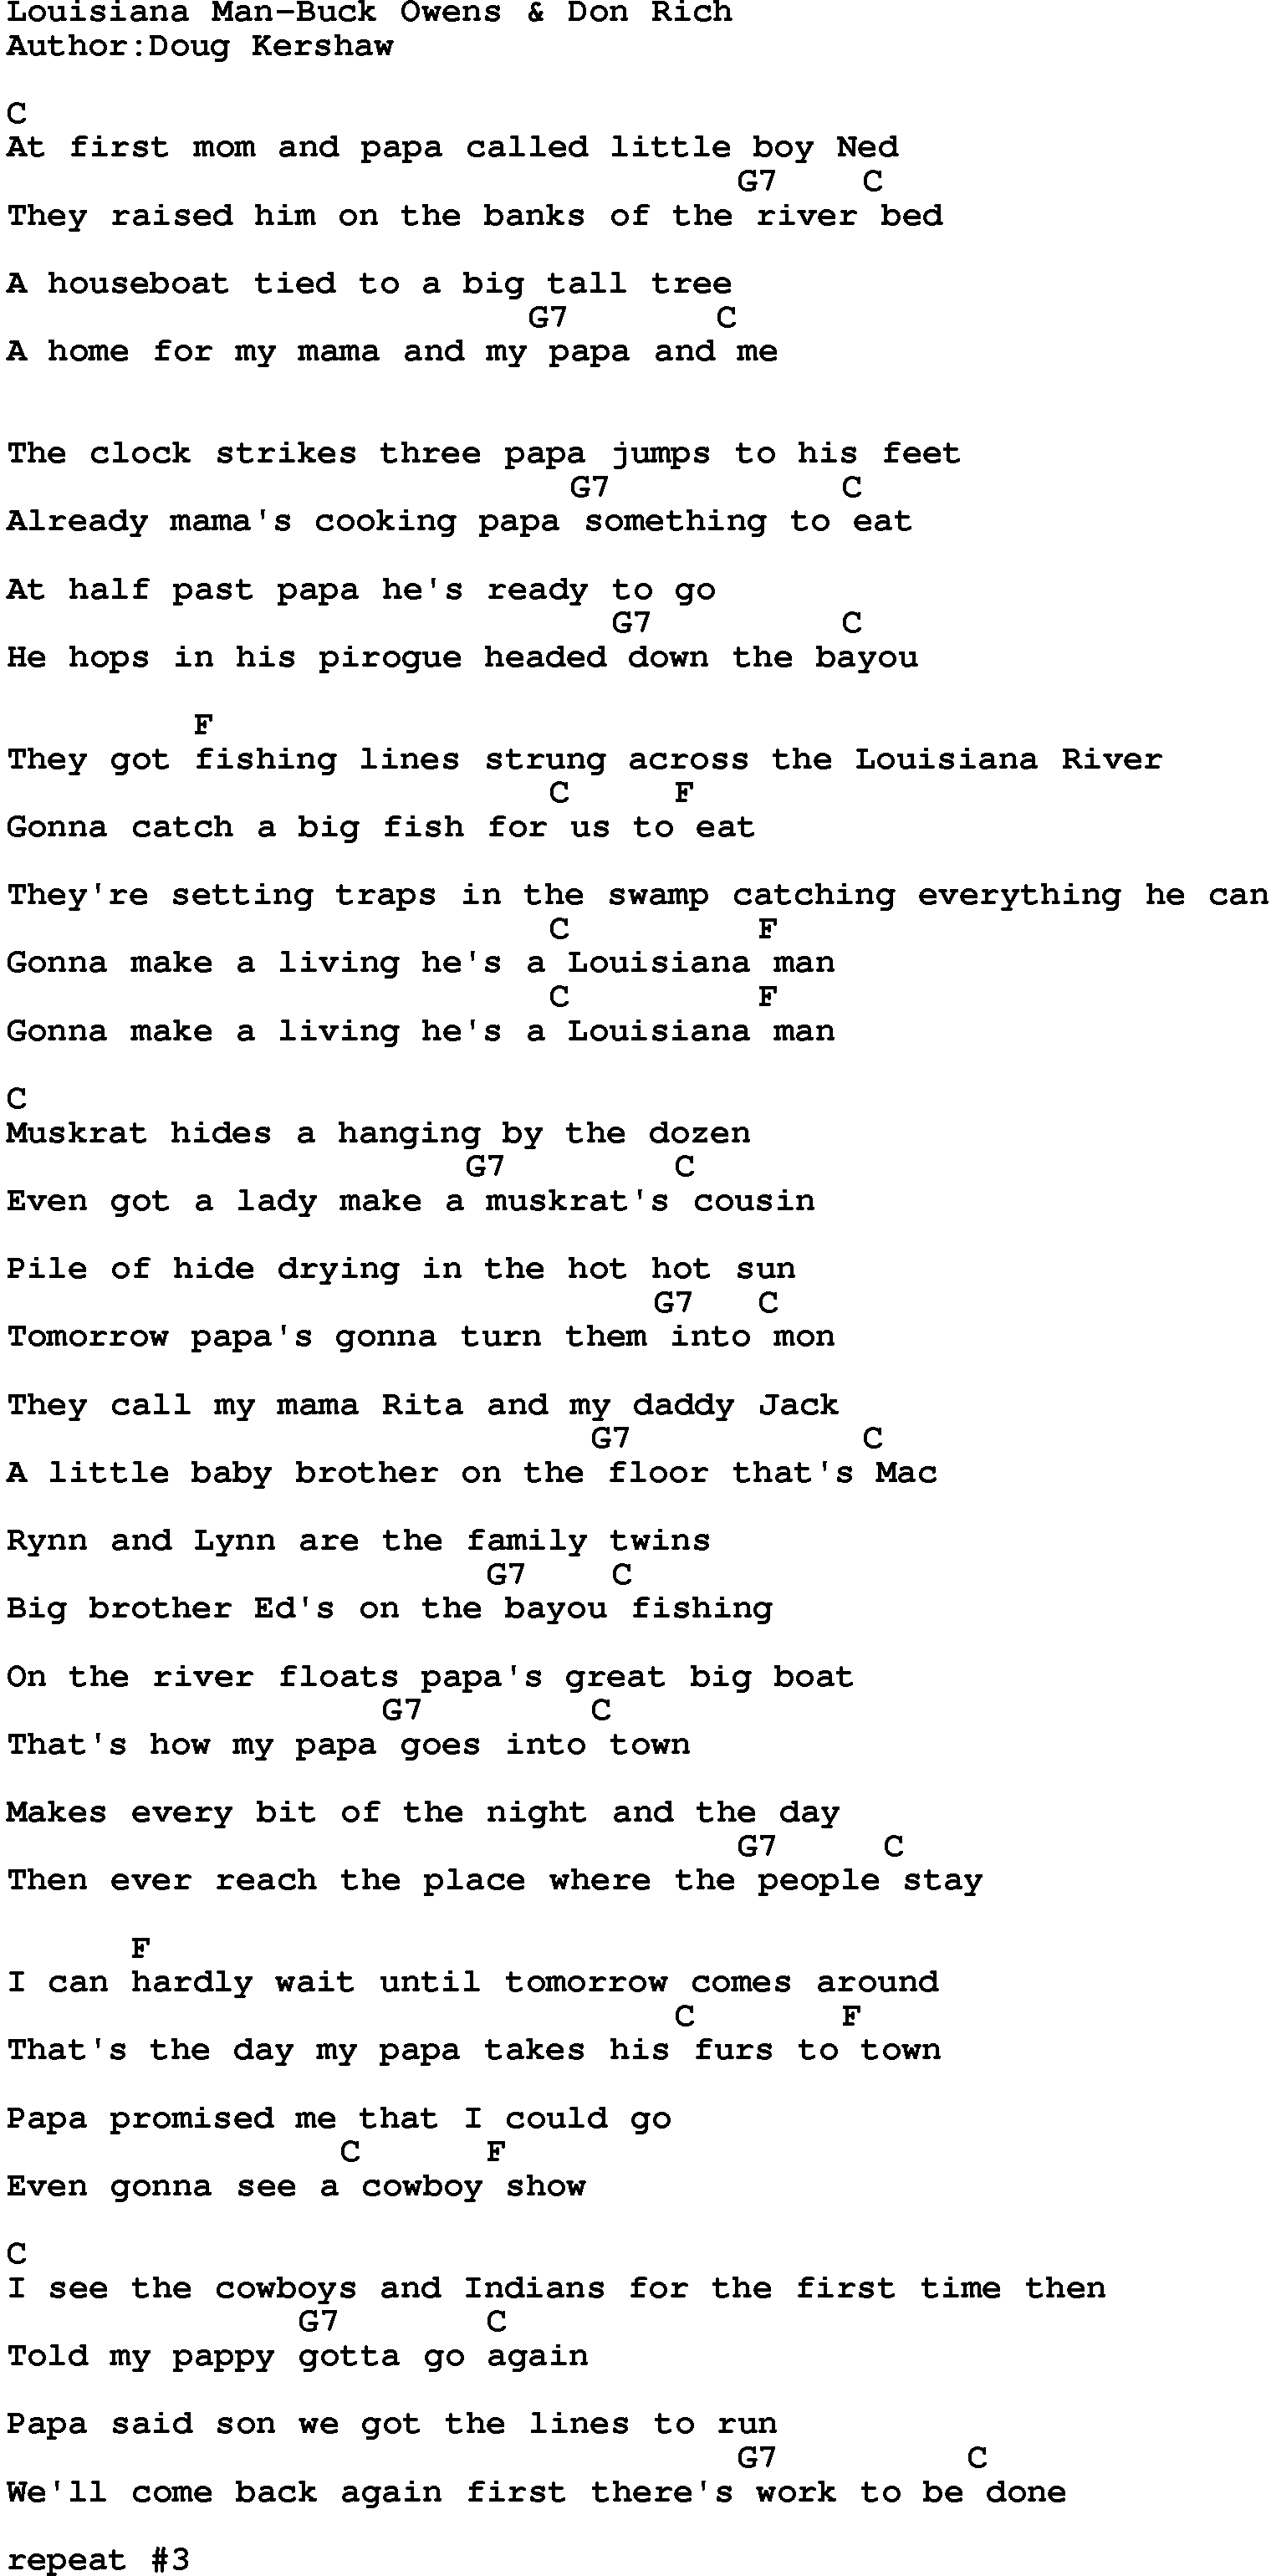 Country music song: Louisiana Man-Buck Owens & Don Rich lyrics and chords